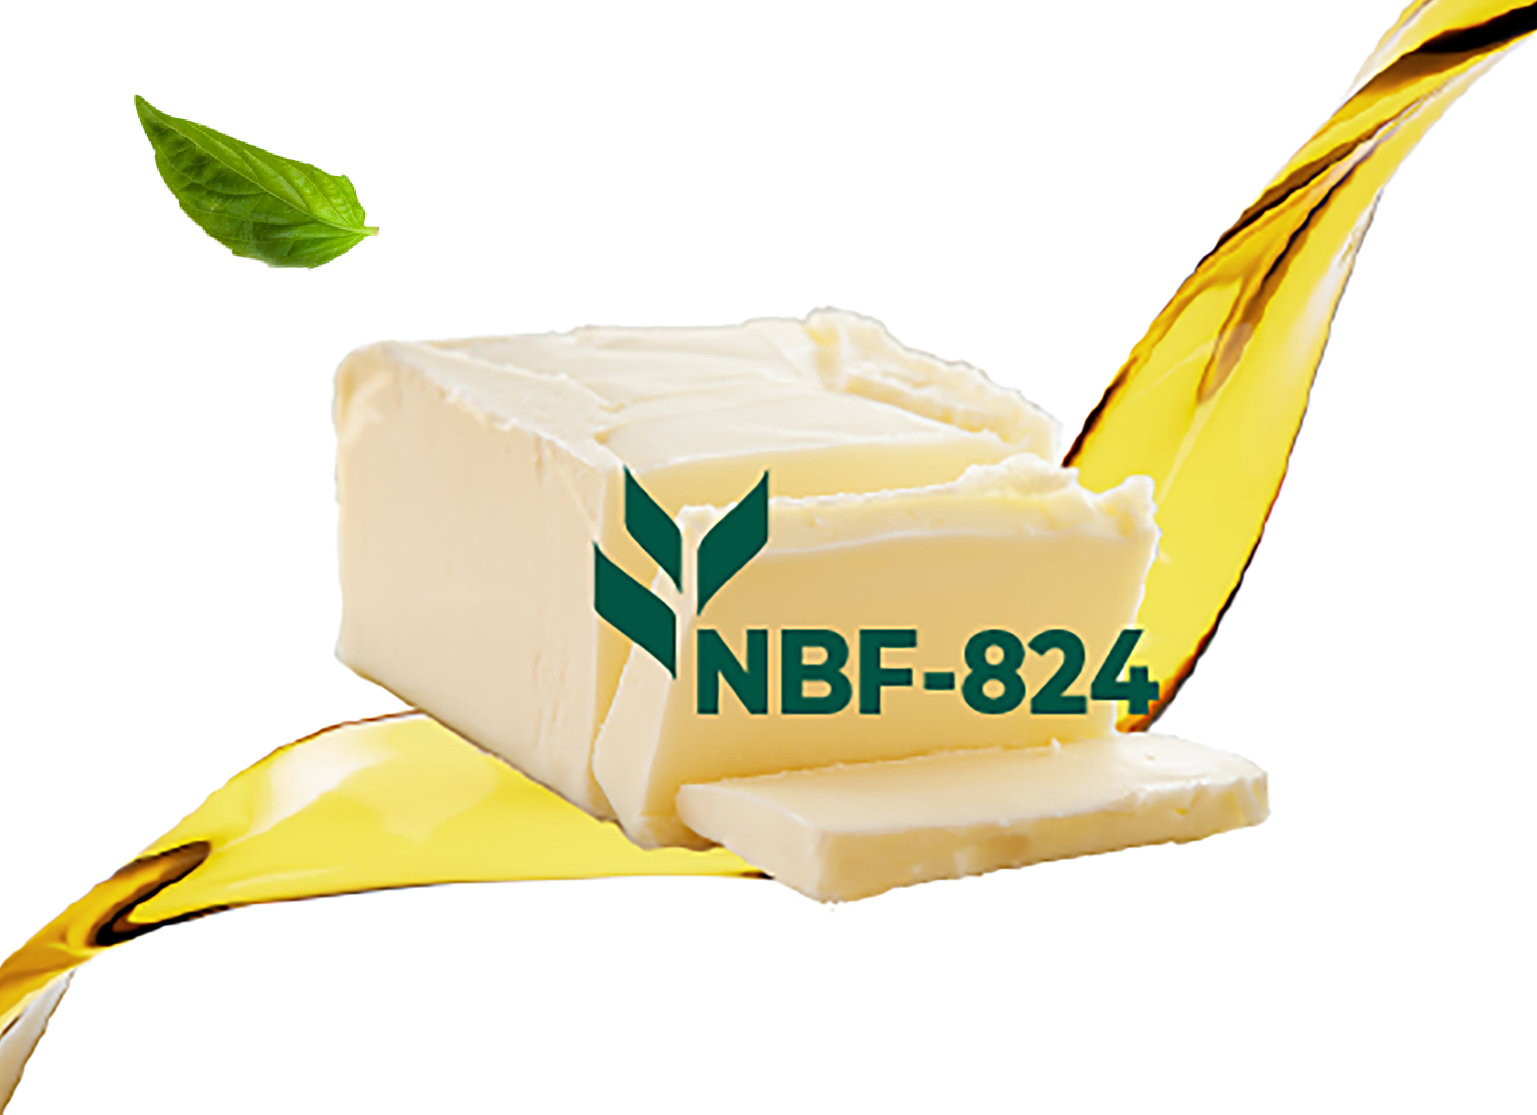 nbf-824